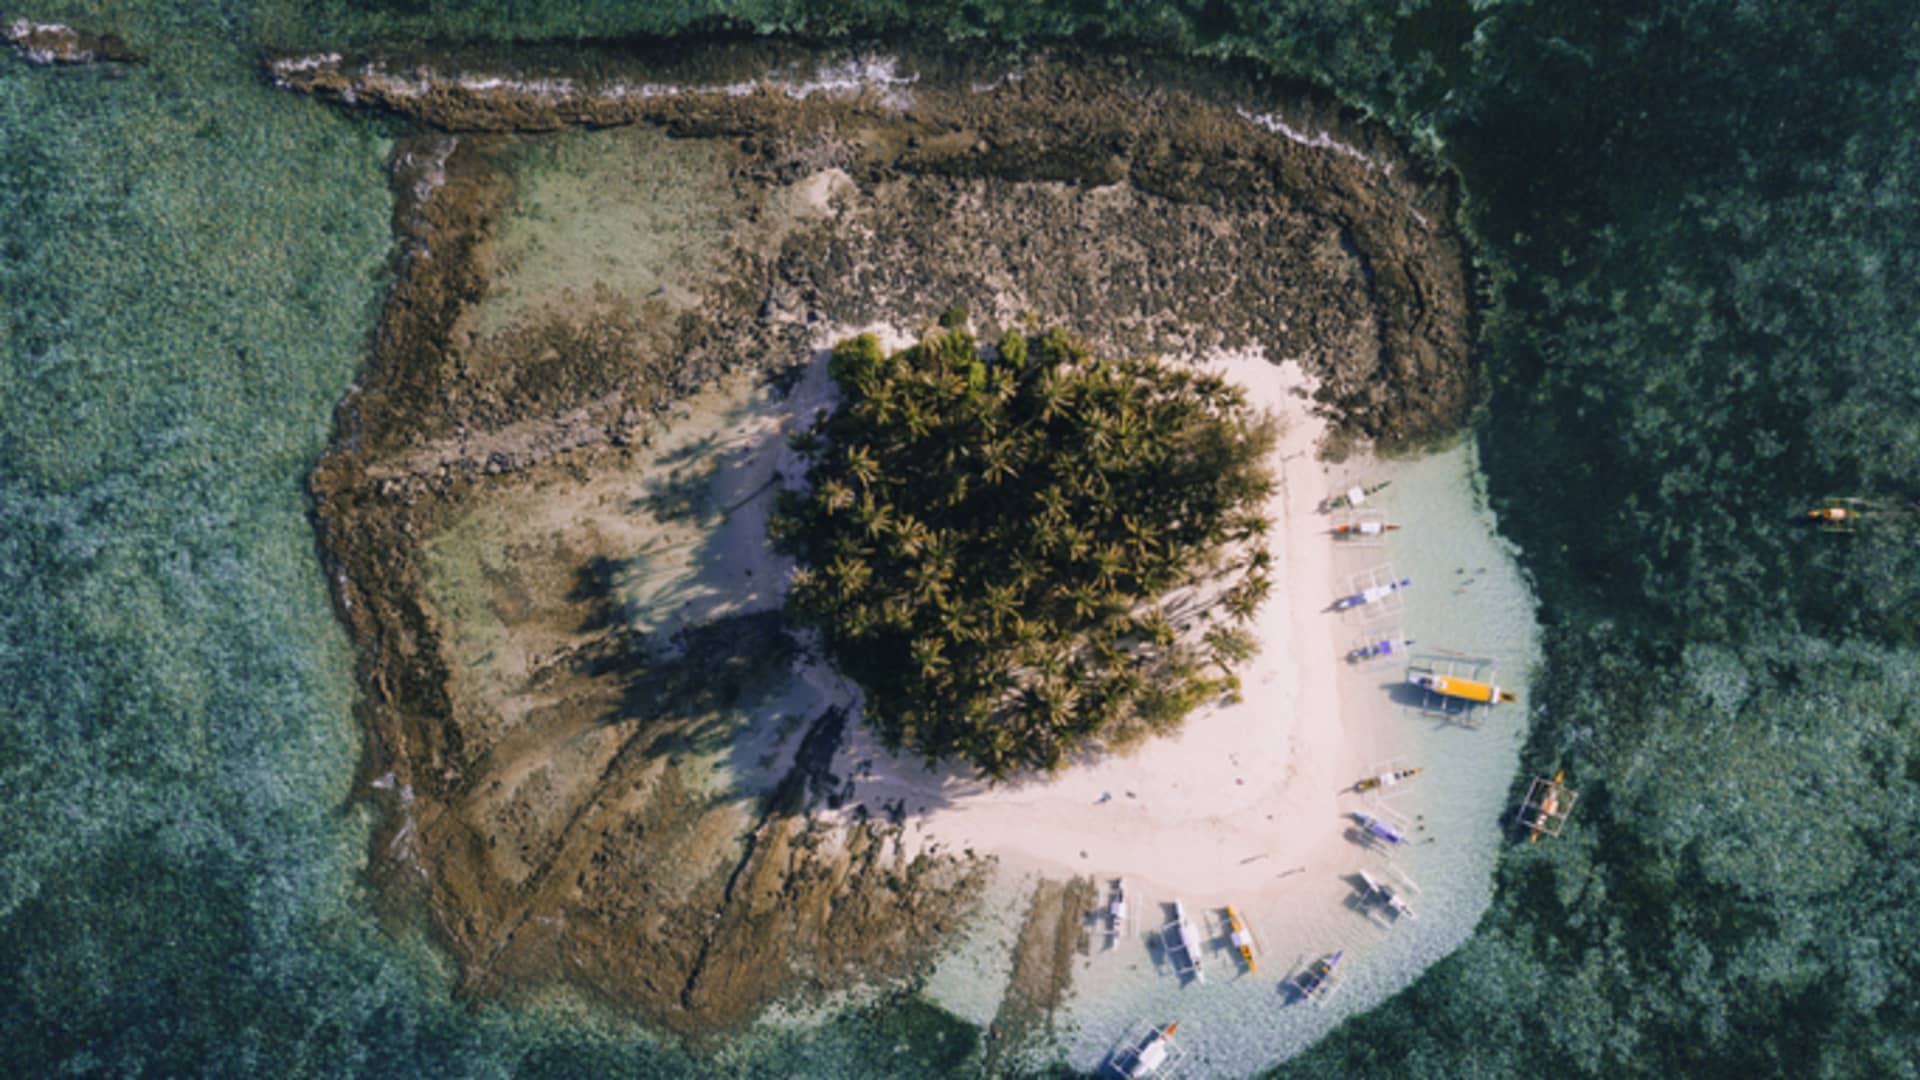 Guyam Island is a small island near Siargao that is popular among island hopping tourists.